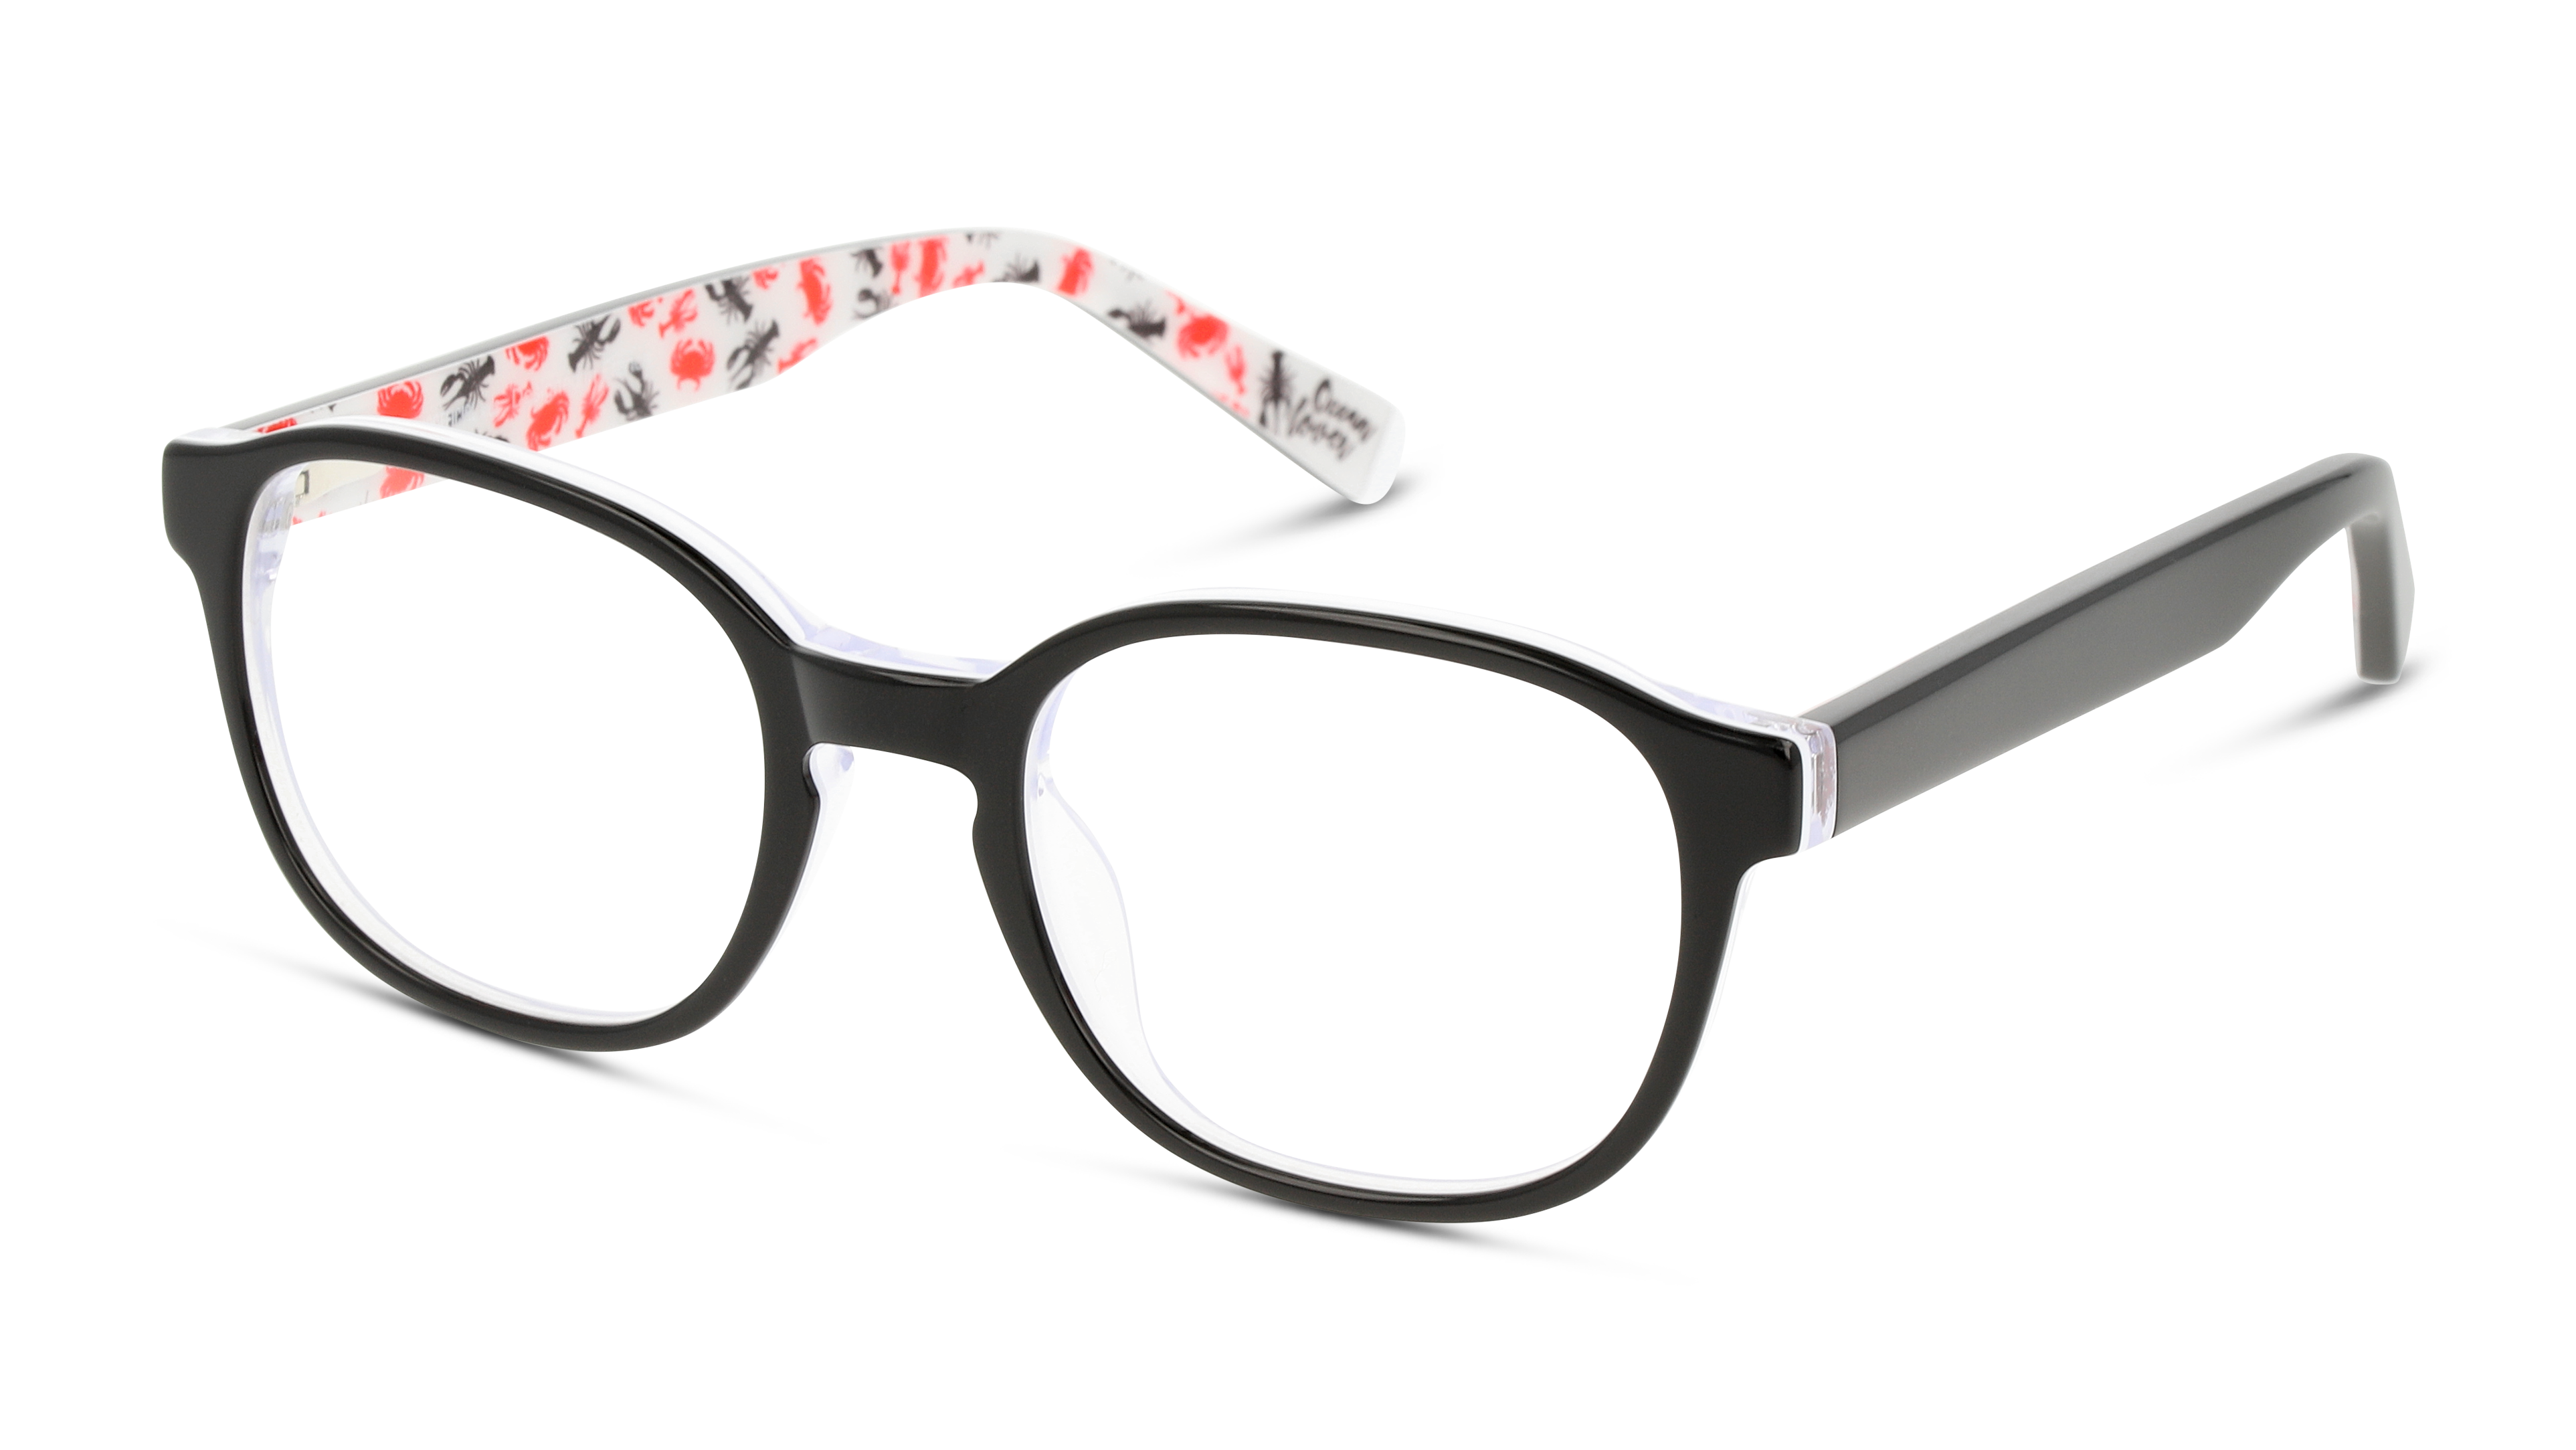 Angle_Left01 Unofficial Kids UNOK5015 (BB00) Children's Glasses Transparent / Black